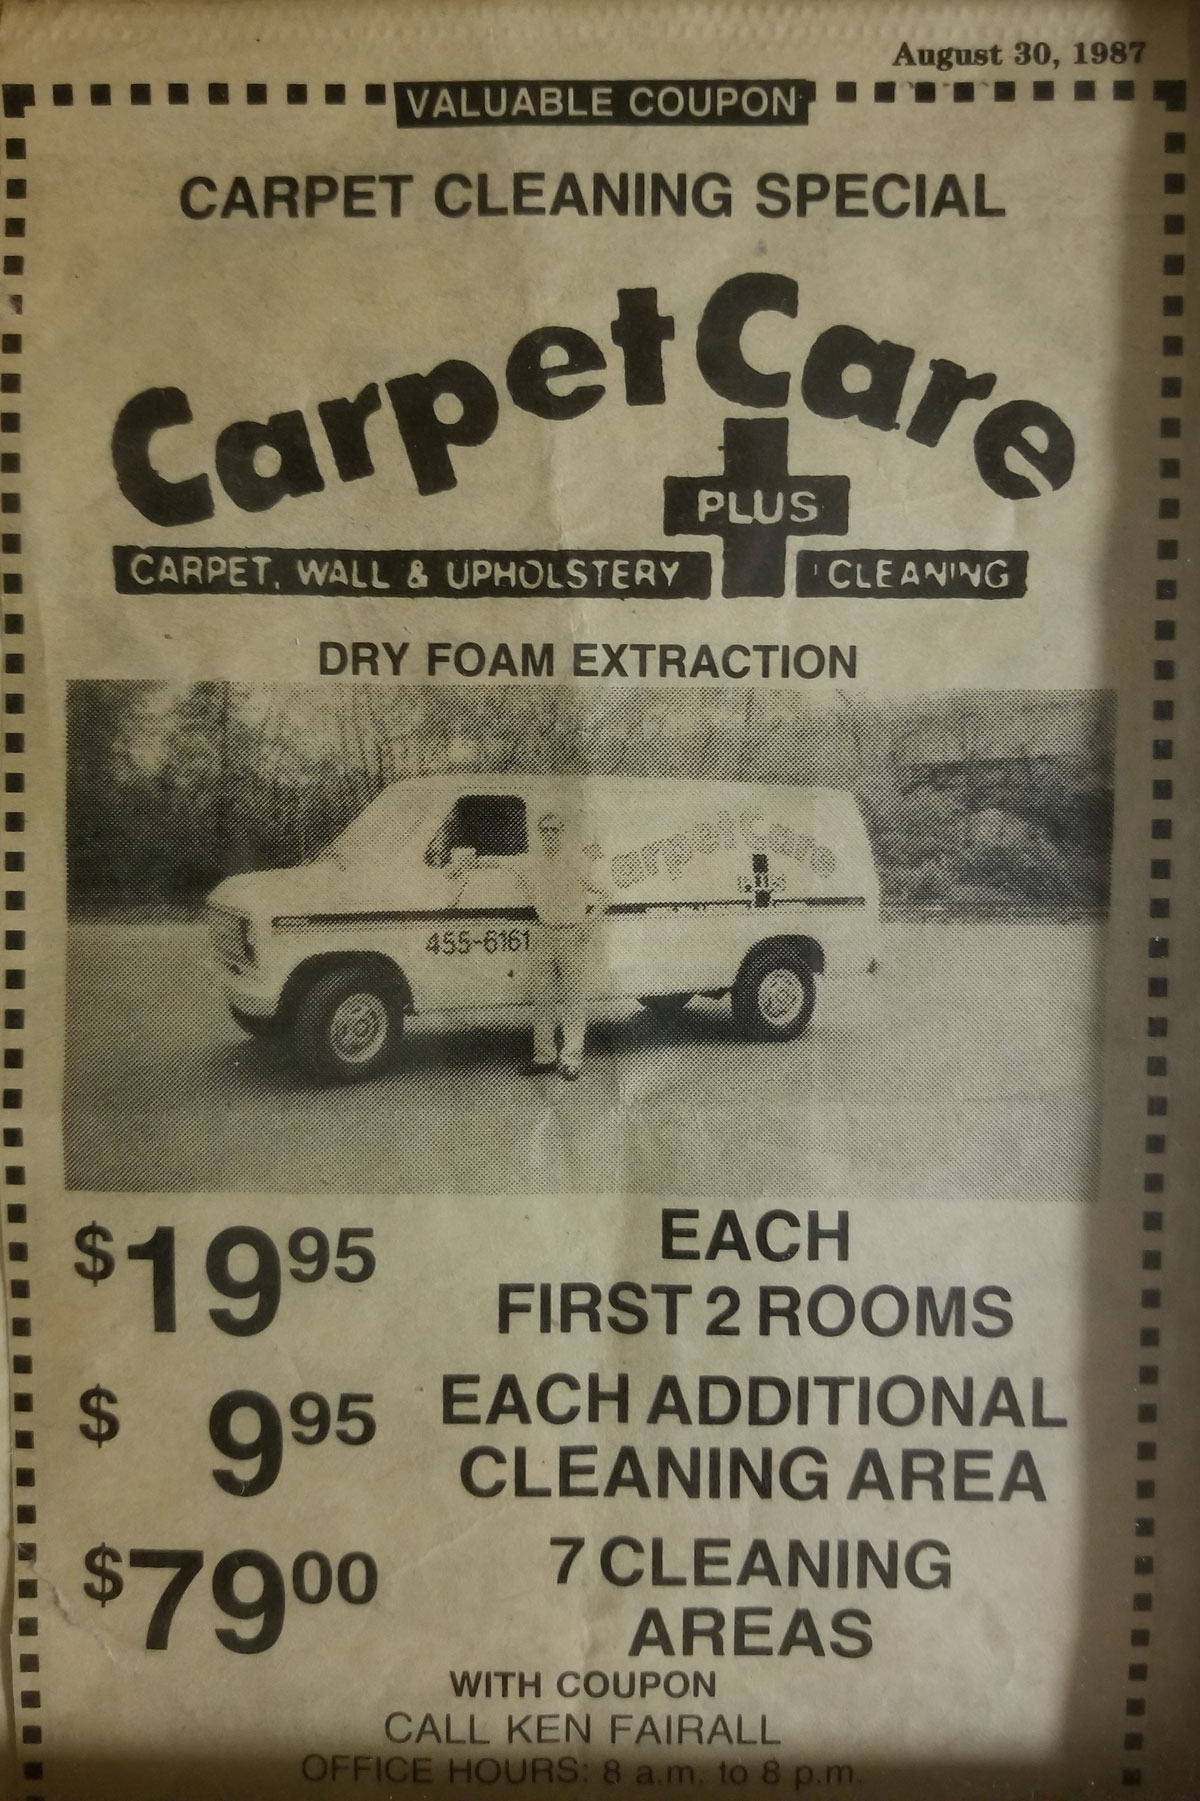 Carpet-Care-Plus-Carpet-Cleaning-Hardwood-Tile-original-Ad